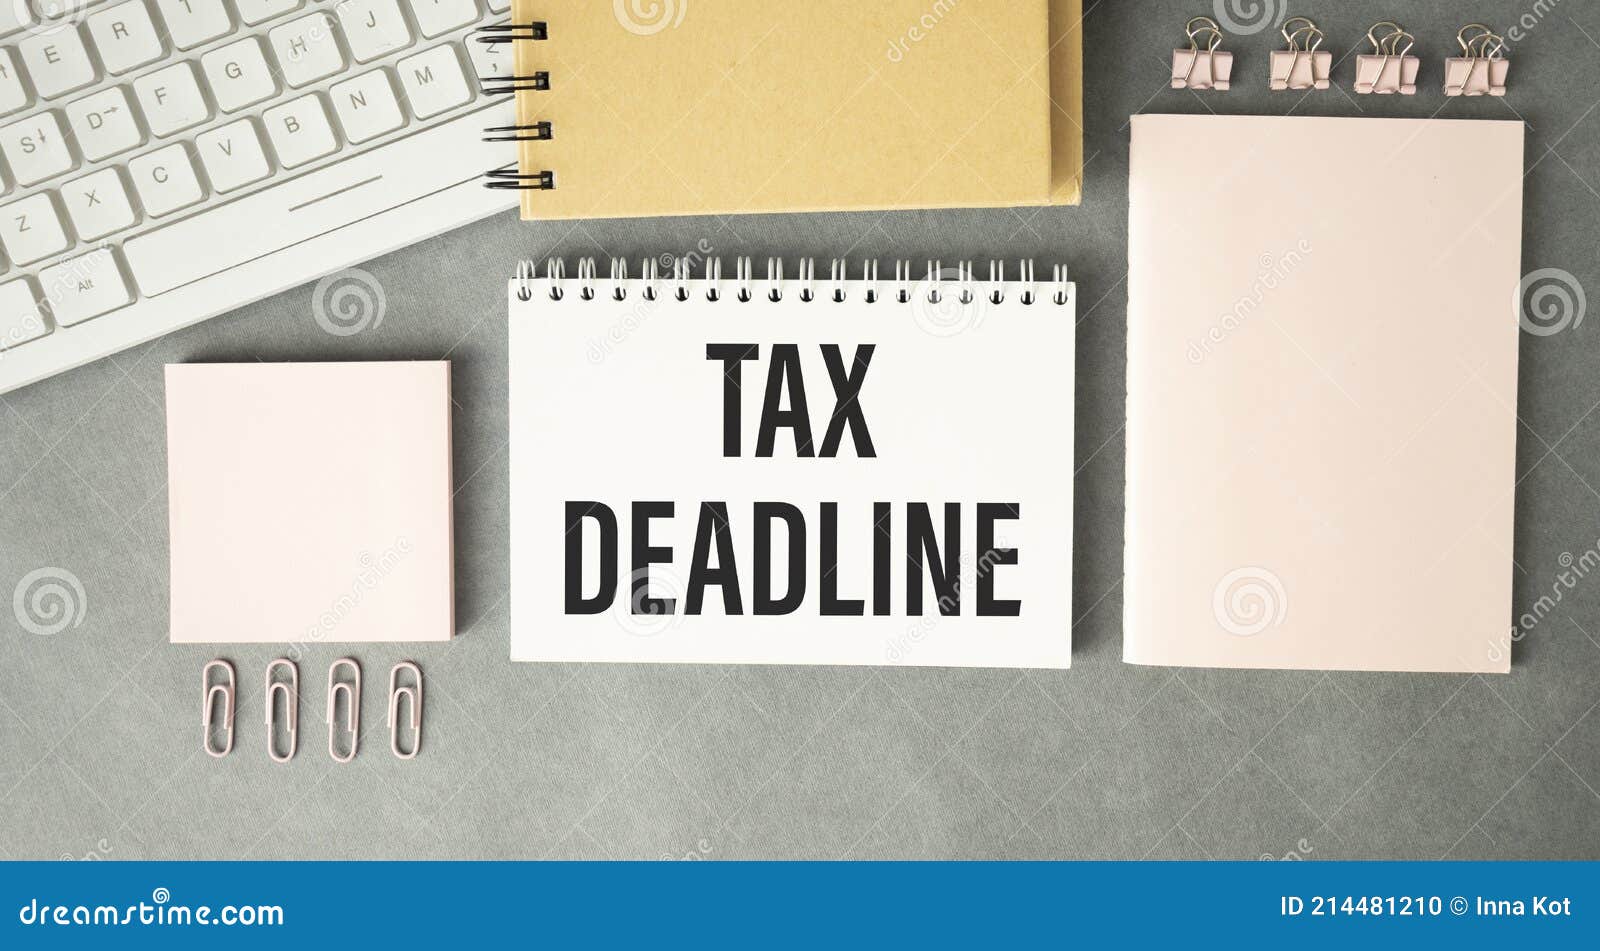 paper sheet with text tax deadline, calculator